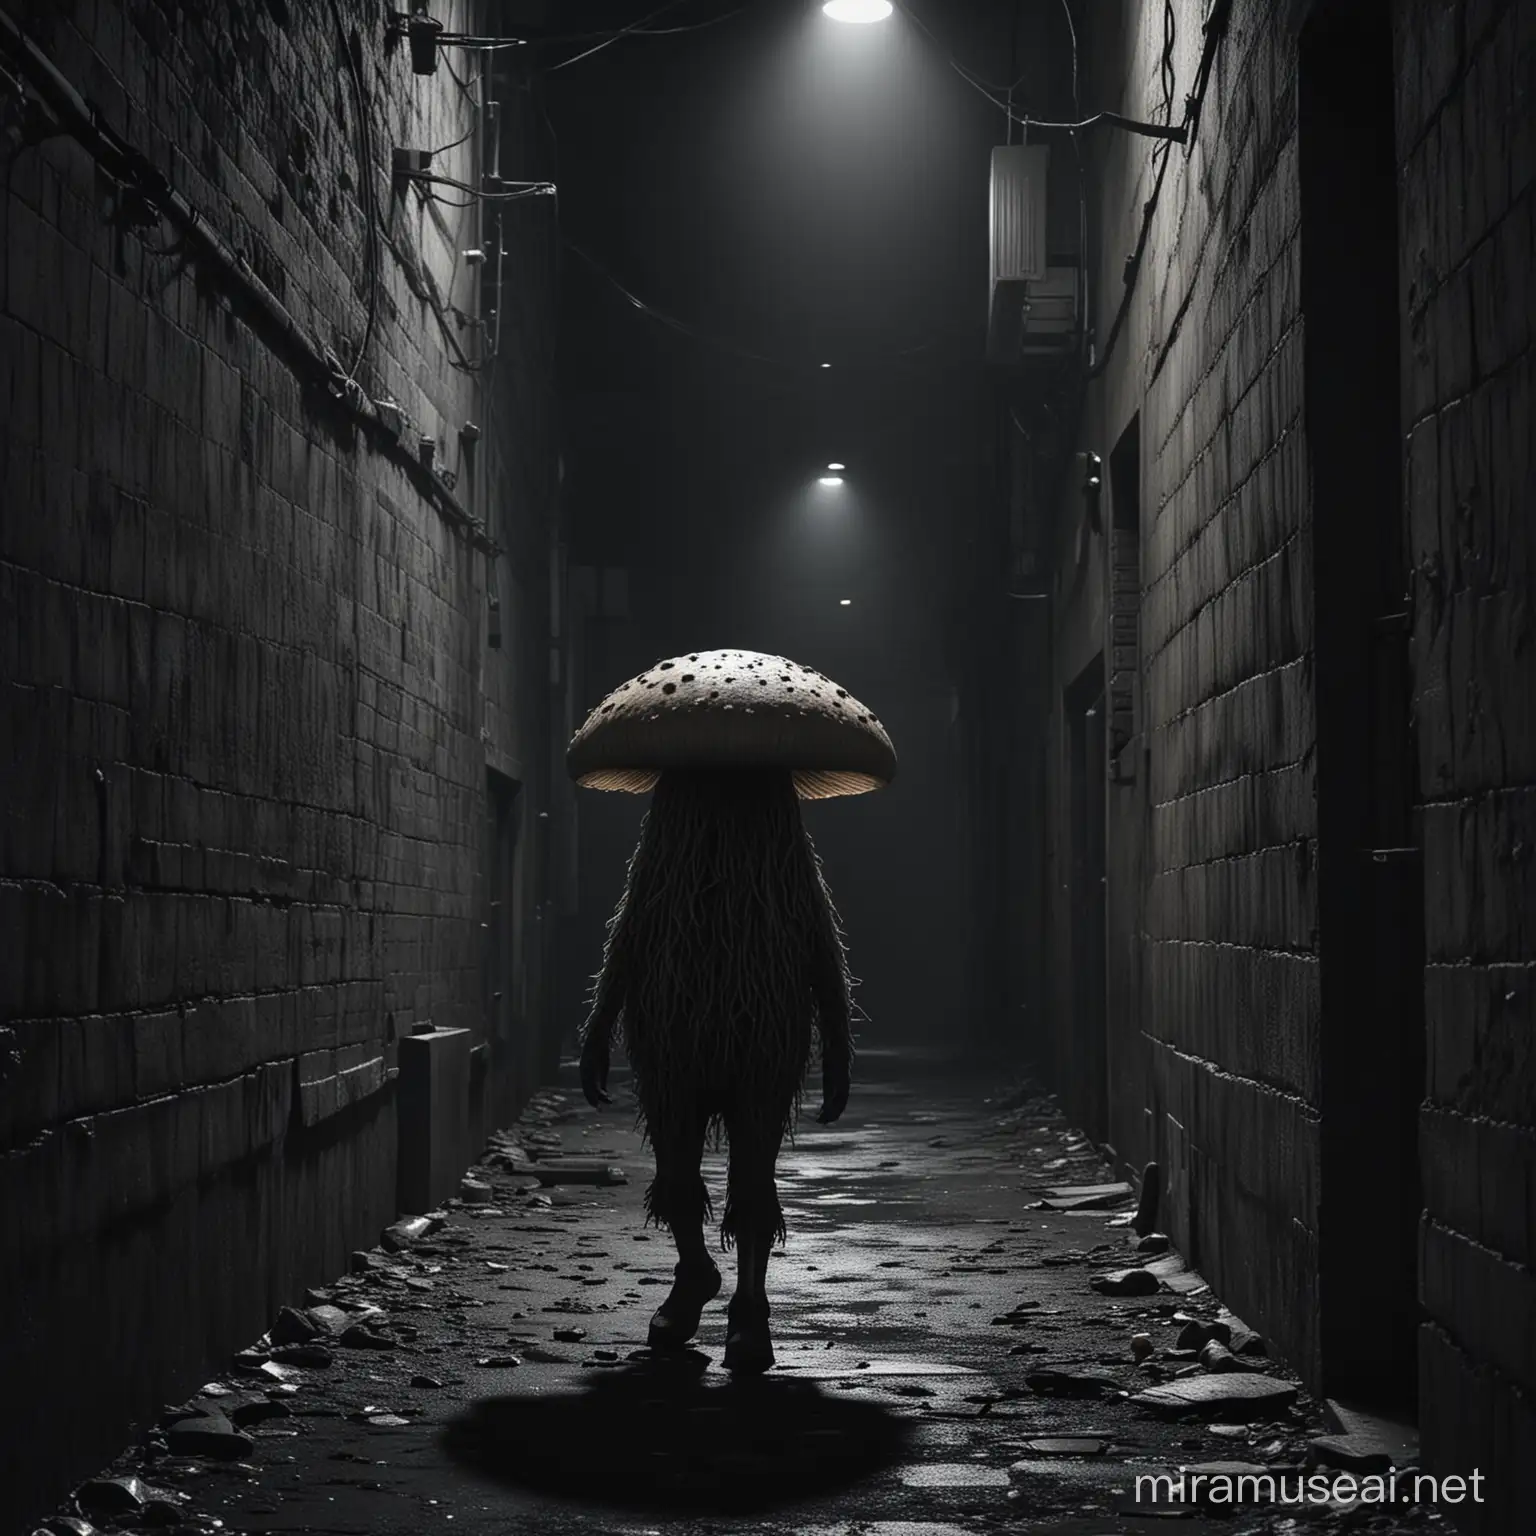 large humanoid mushroom creature in dark urban alley half cloaked in darkness